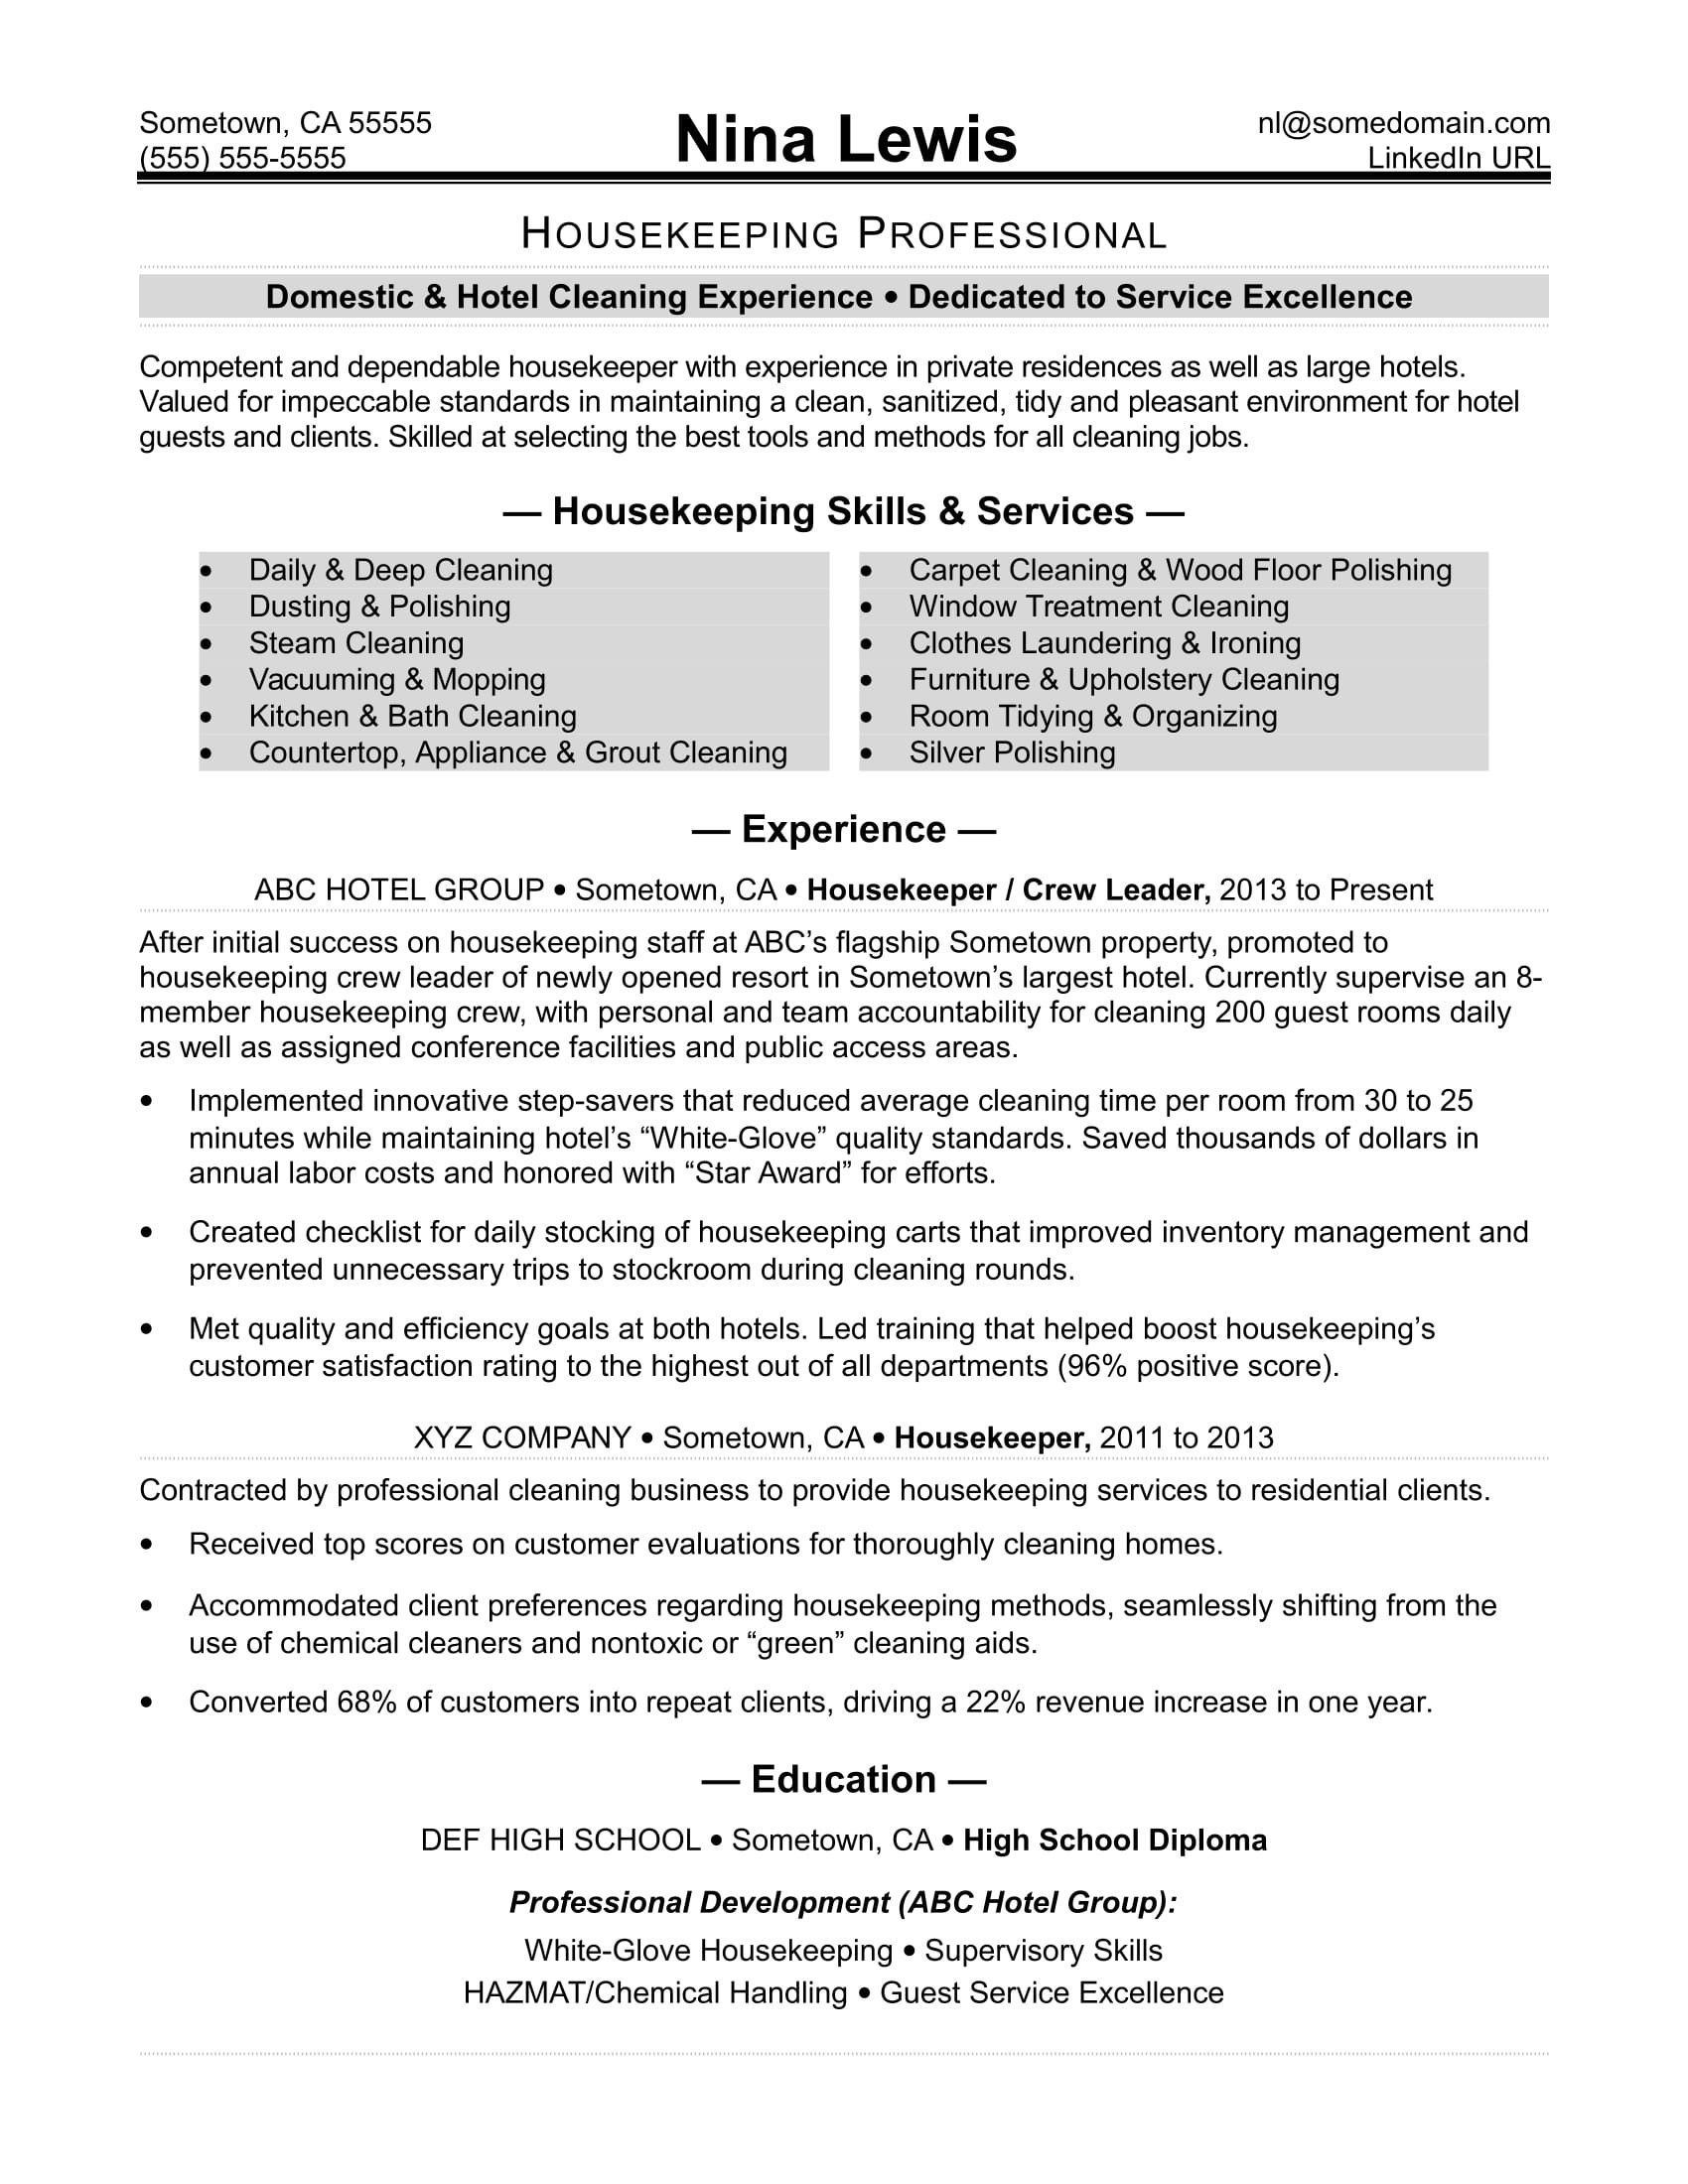 Sample Resume for Self Employed Housekeeper Housekeeping Resume Monster.com